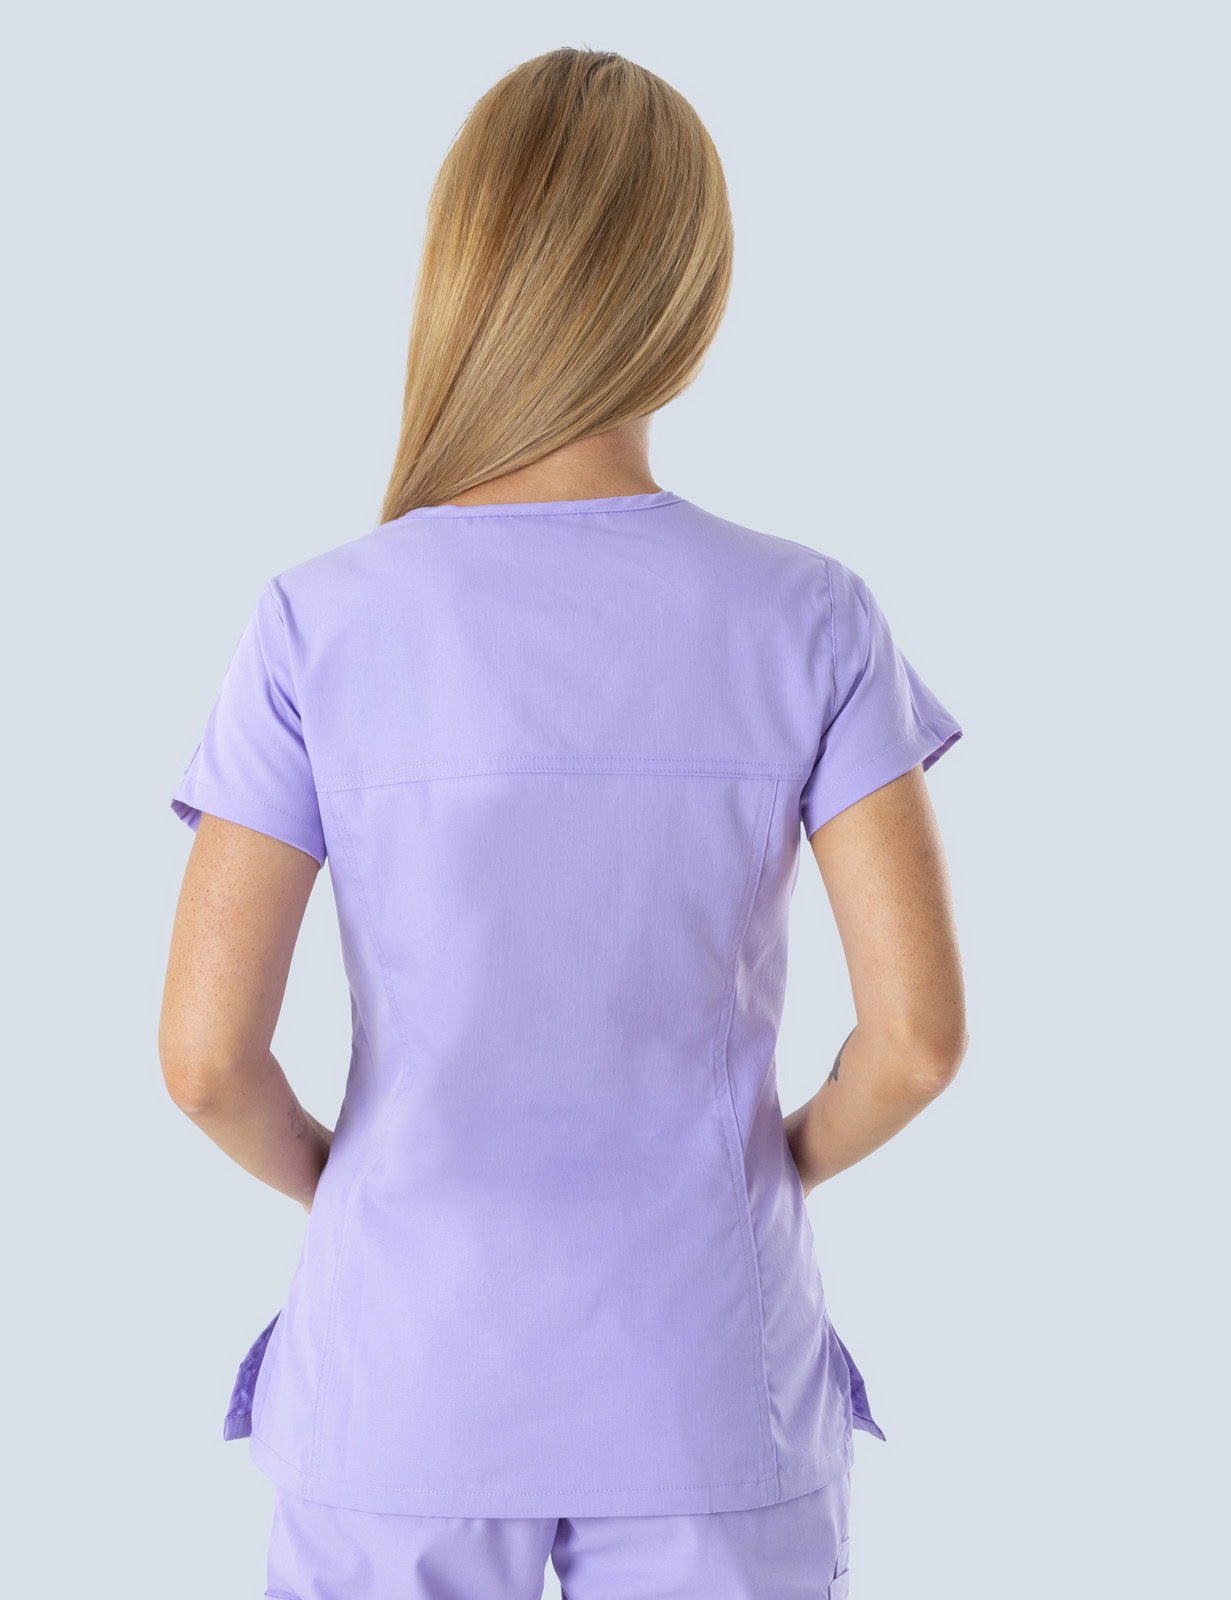 Queensland Children's Hospital Emergency Department Enrolled Nurse Uniform Top Bundle  (Women's Fit Top in Lilac incl Logos)